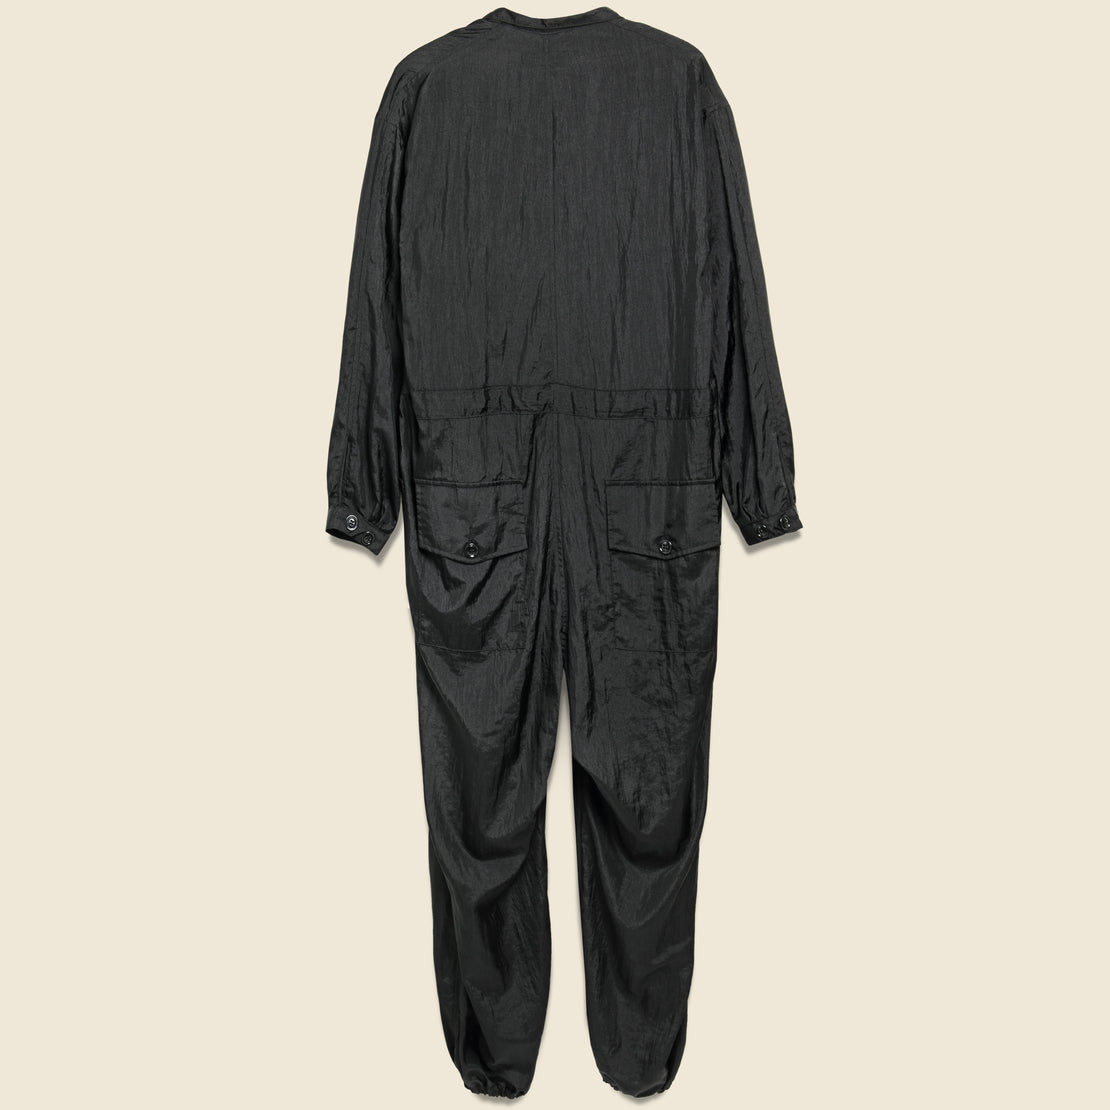 Taslan Nylon Type-D Military Tsunagi Jumpsuit - Black - Monitaly - STAG Provisions - W - Onepiece - Jumpsuit